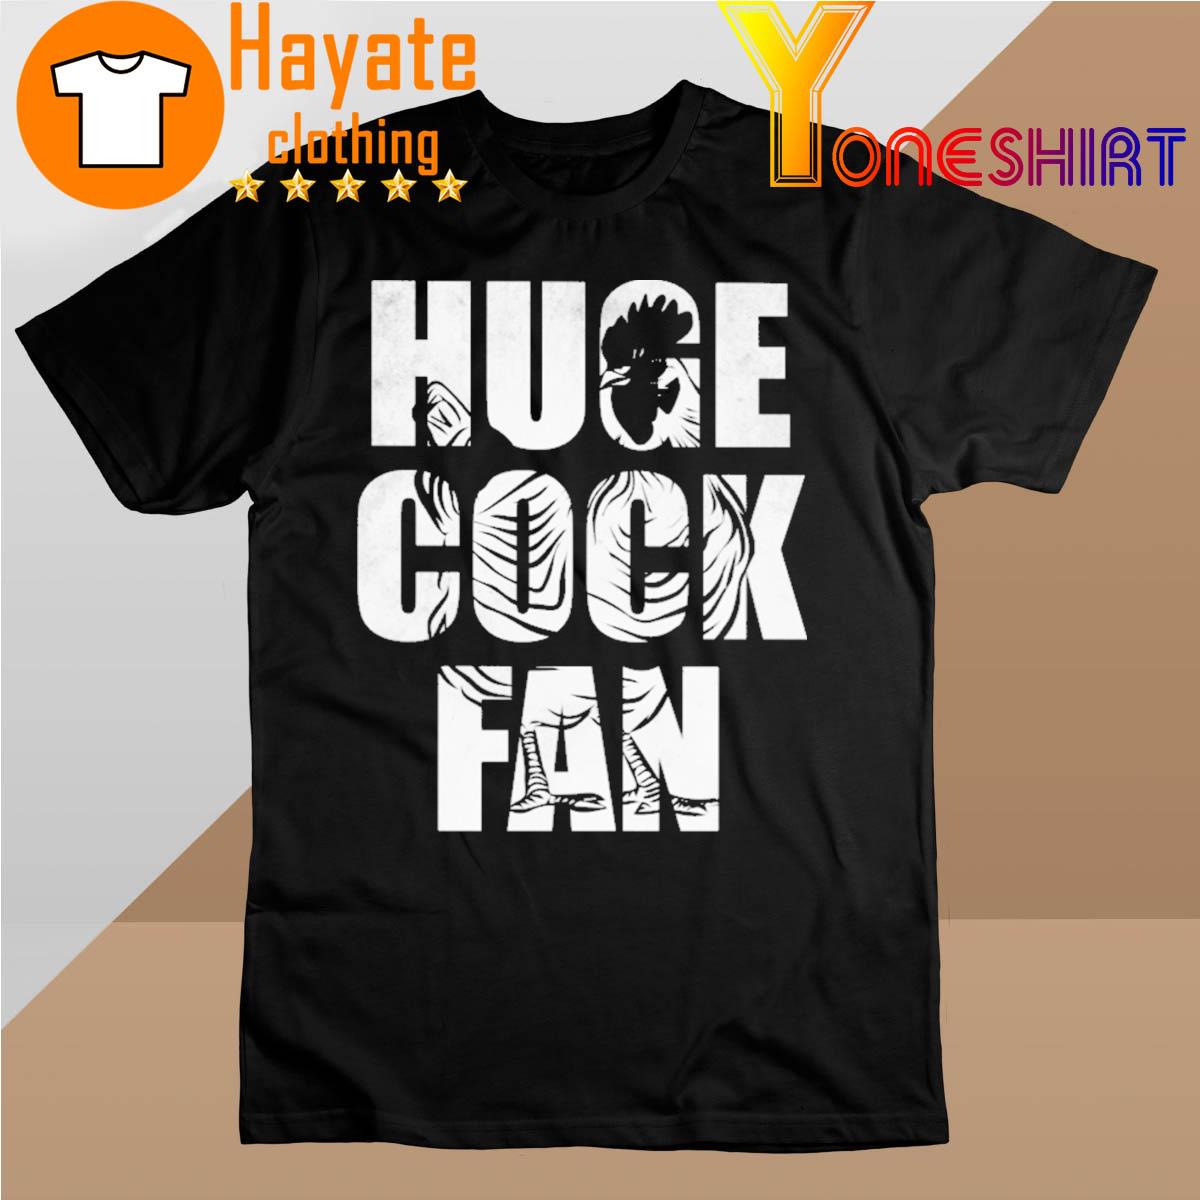 Official Huge Cock Fan shirt